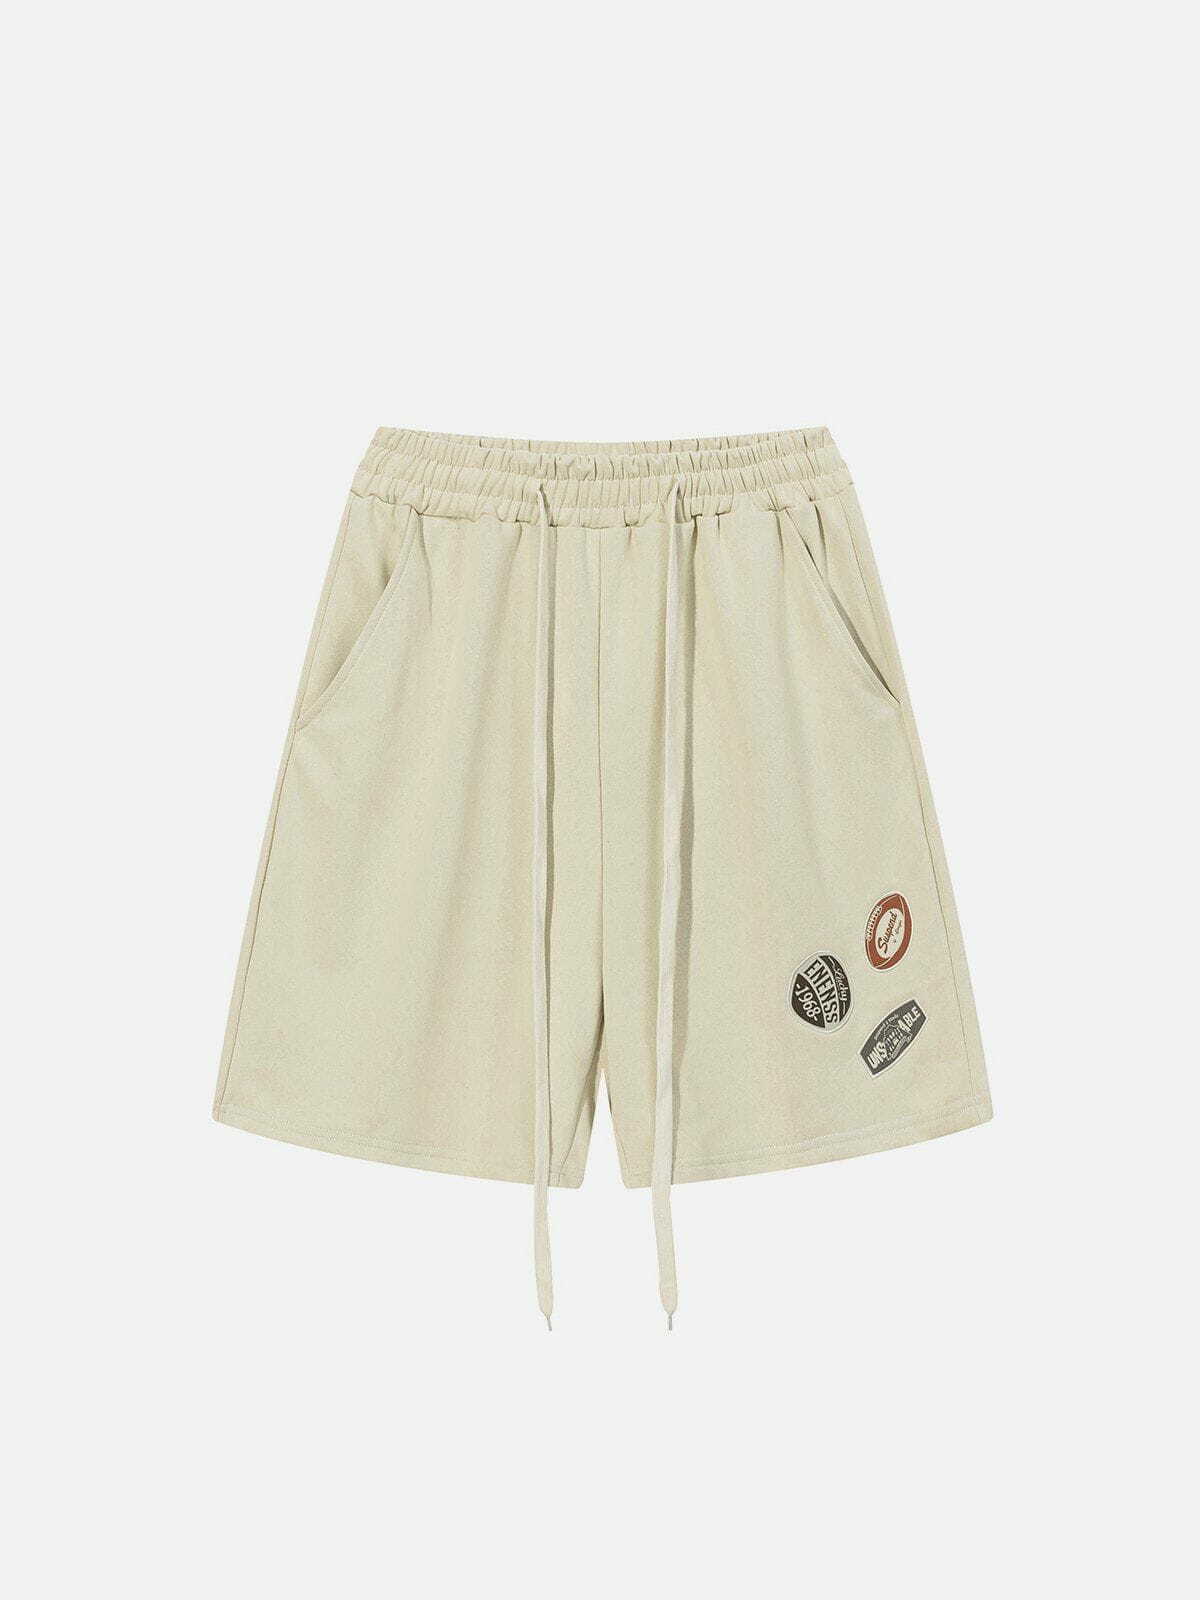 embroidered badge shorts urban streetwear 4776